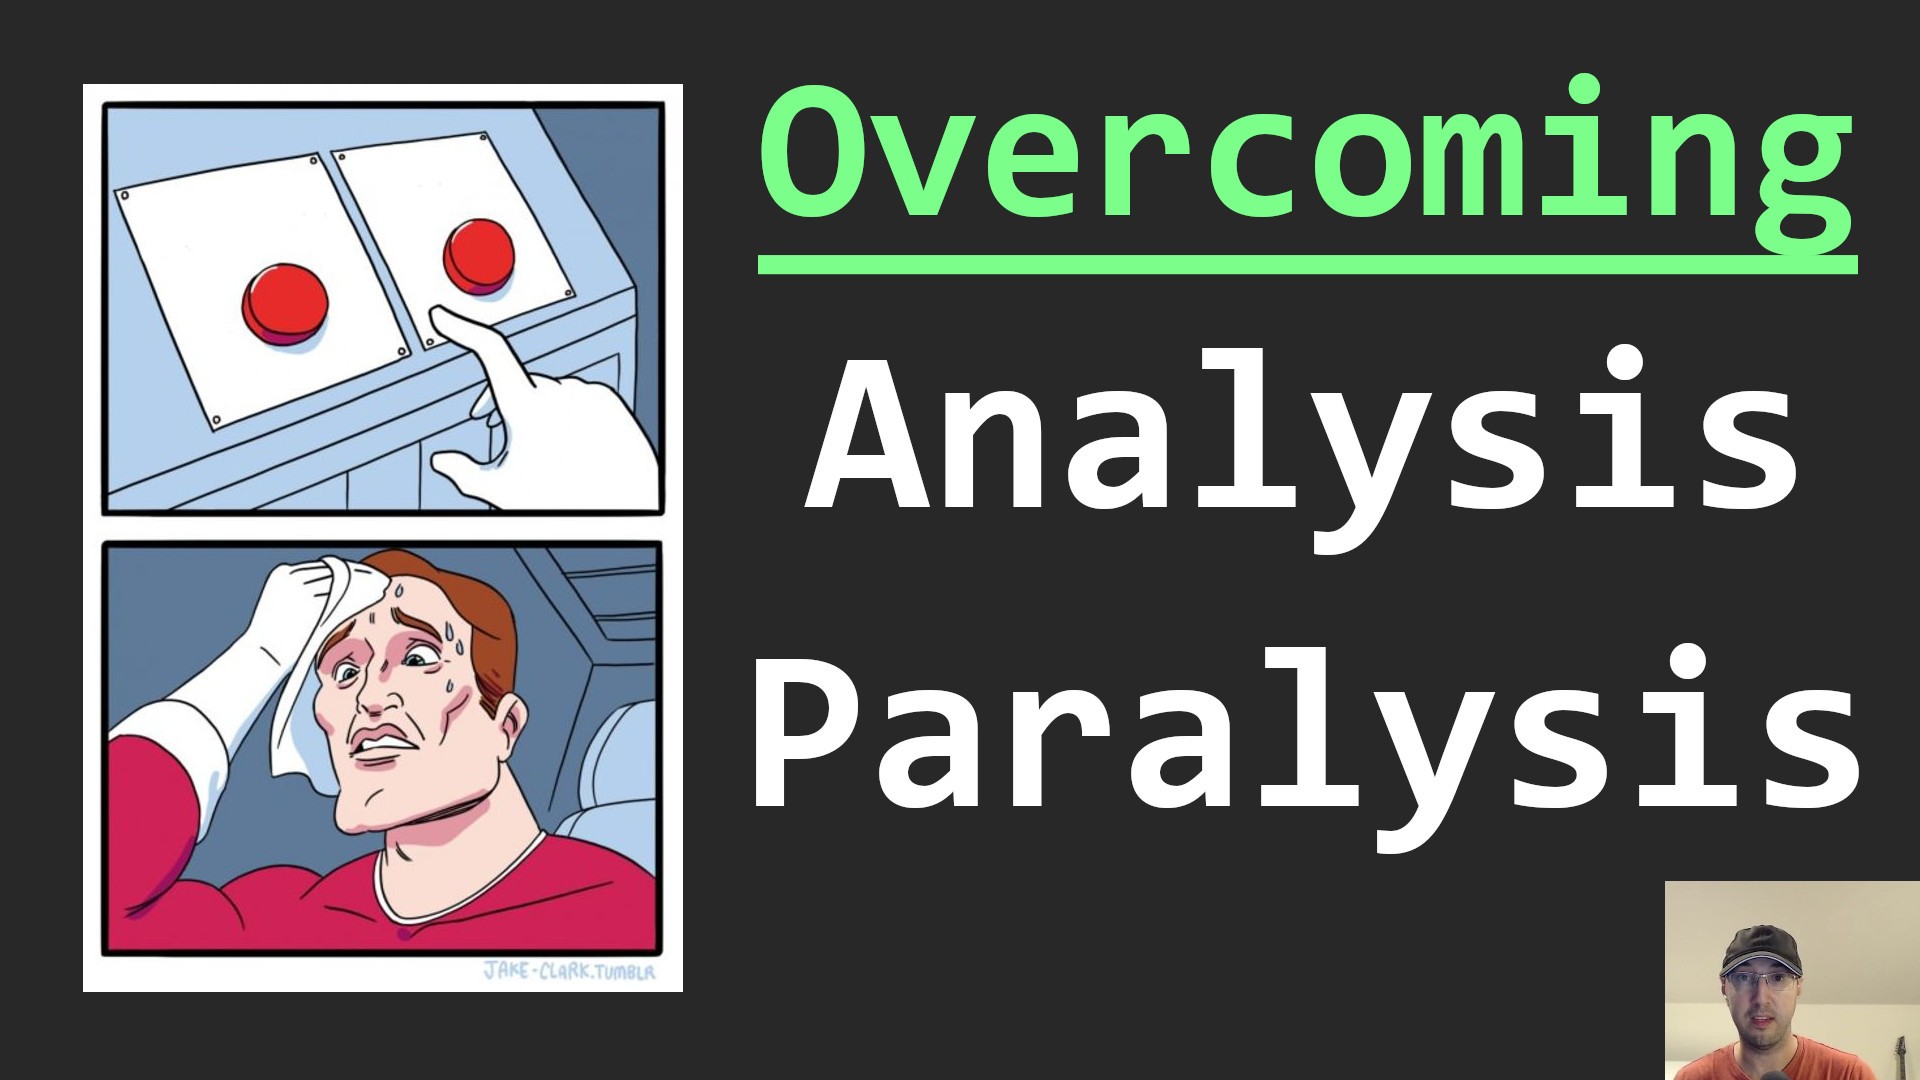 blog/cards/overcoming-analysis-paralysis-as-a-software-developer.jpg